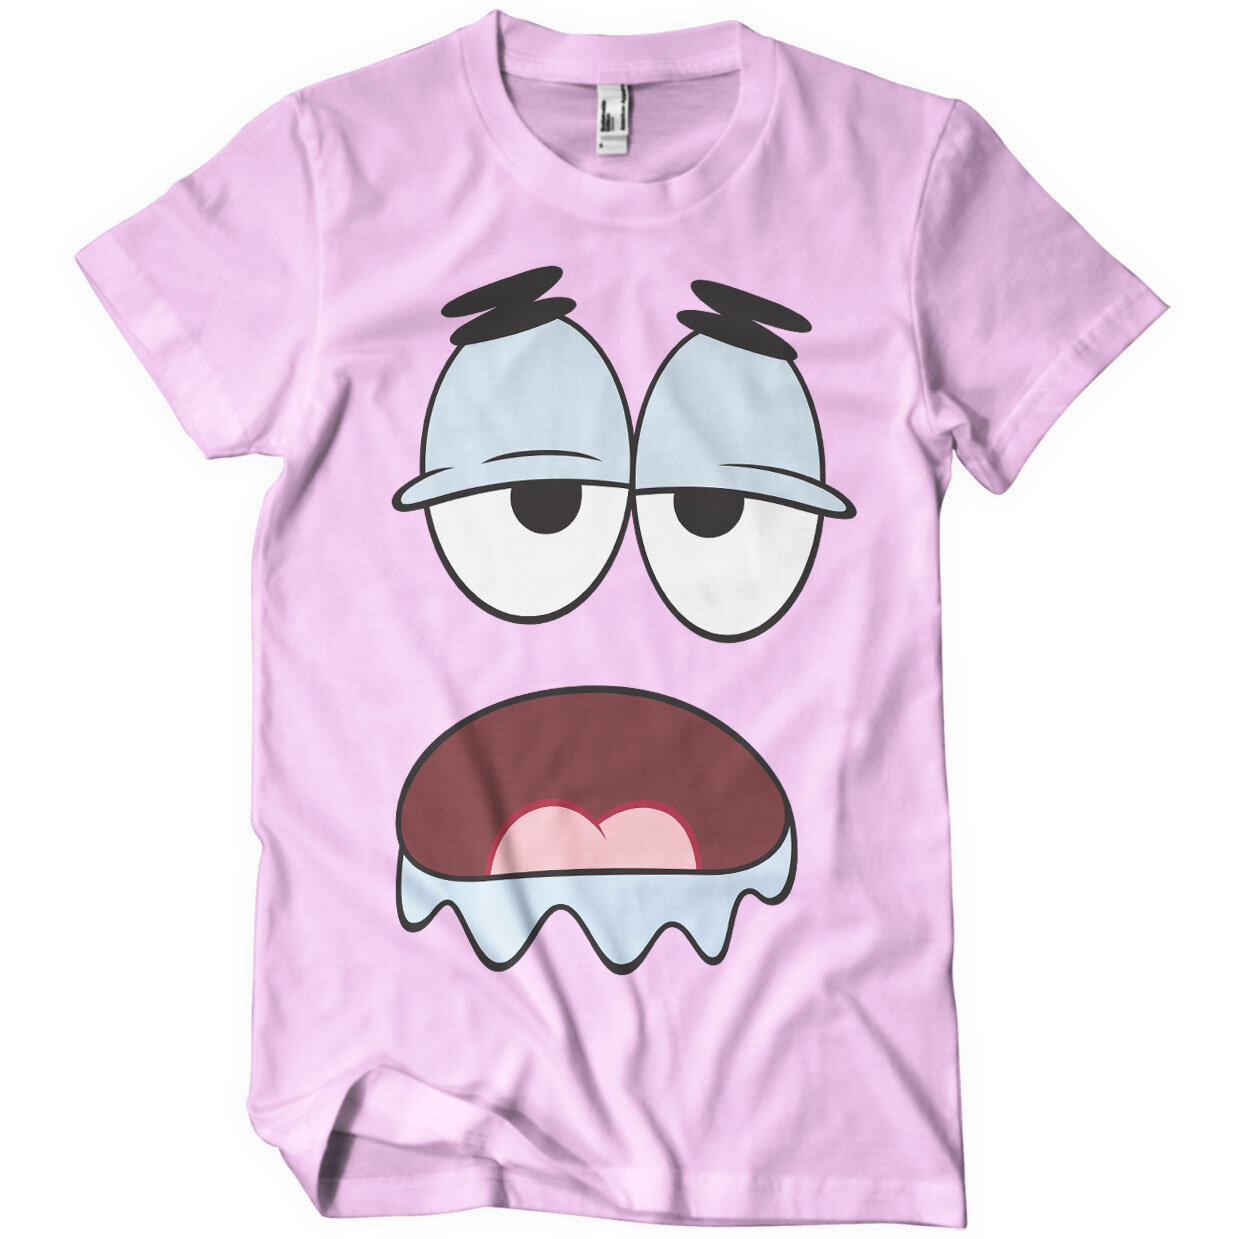 Patrick Big Face T-Shirt